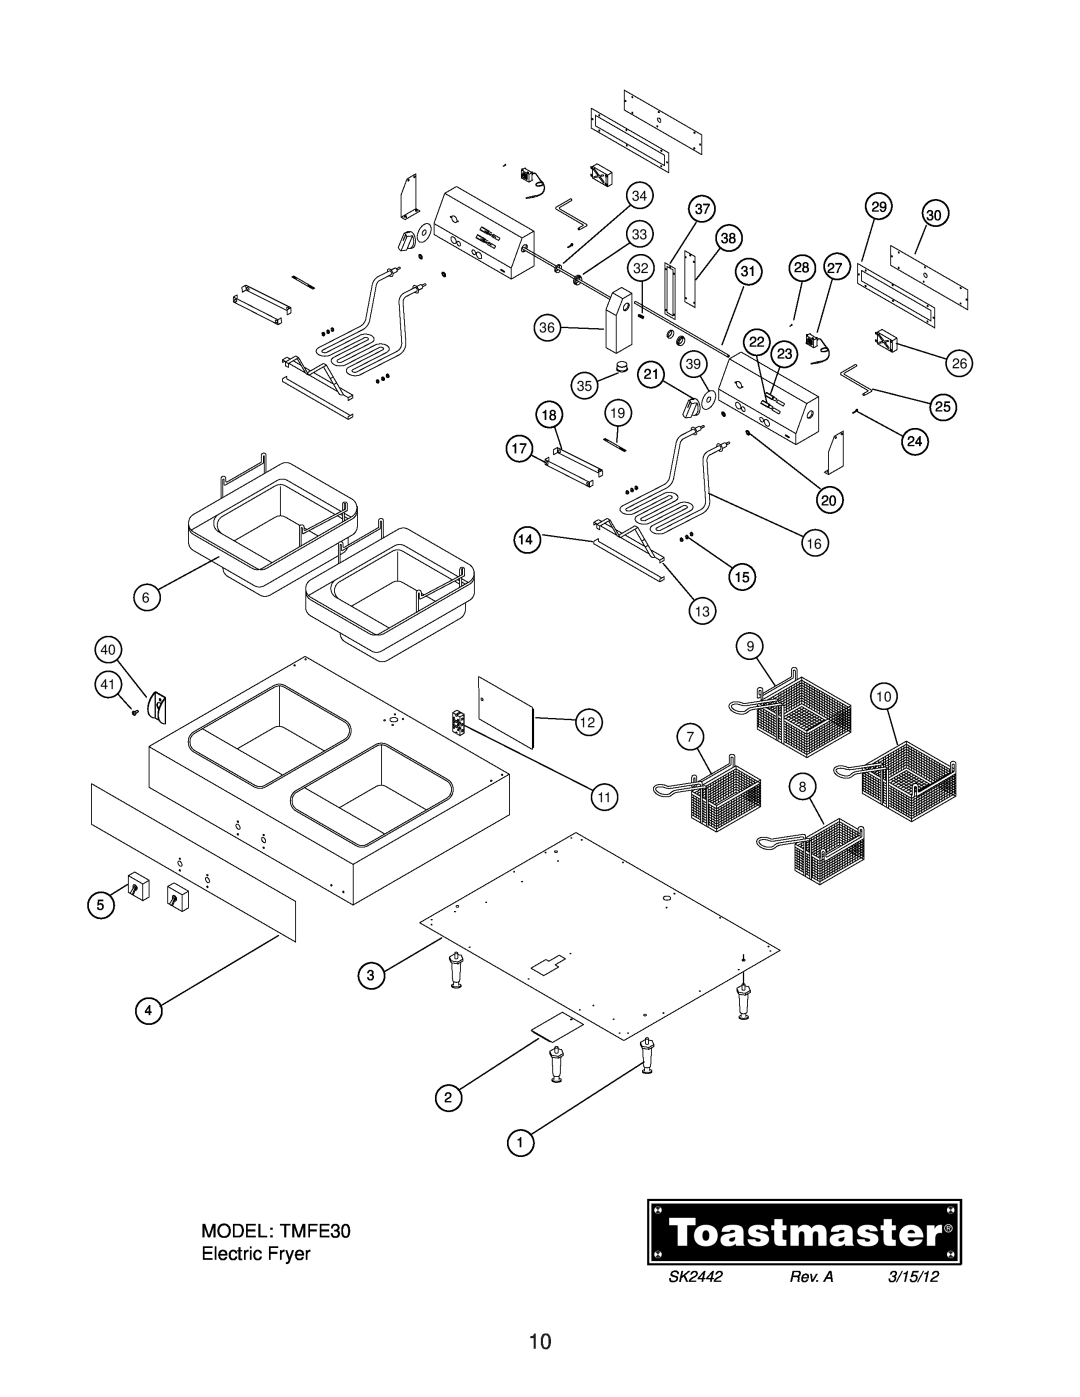 Toastmaster TMFE15 manual MODEL TMFE30, SK2442, Rev. A, 3/15/12 